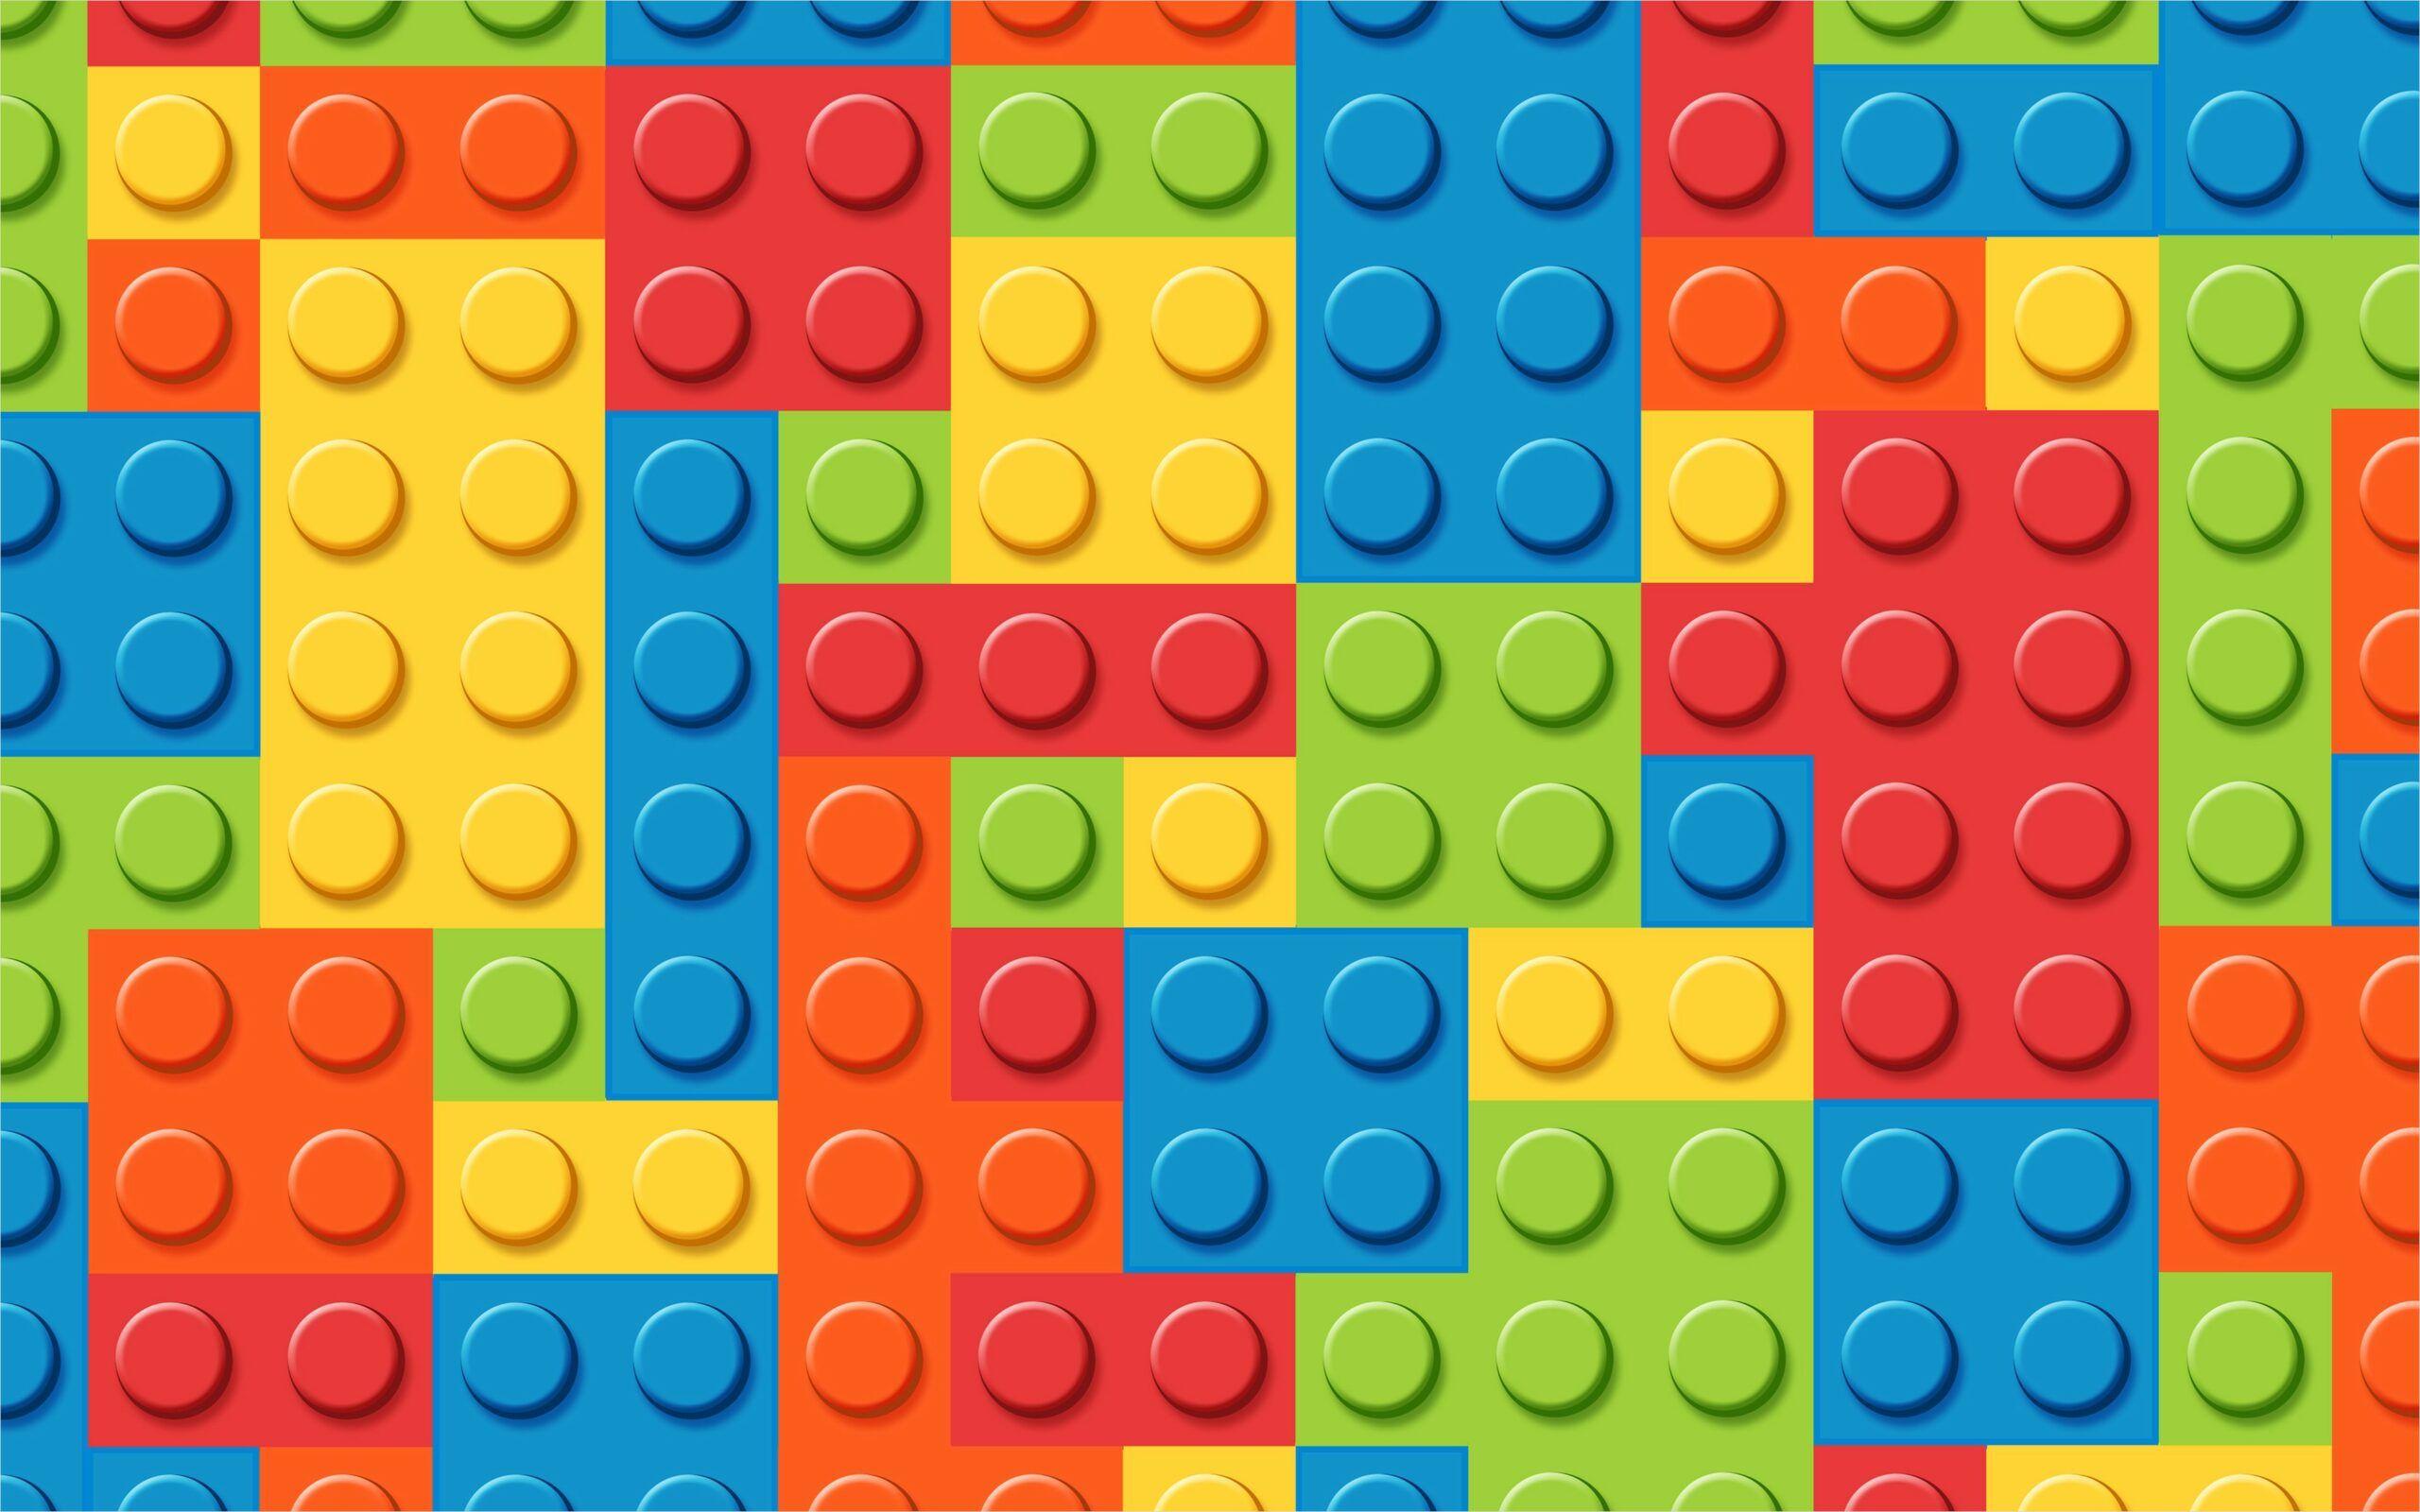 Lego Bricks Wallpapers Top Free Lego Bricks Backgrounds Wallpaperaccess